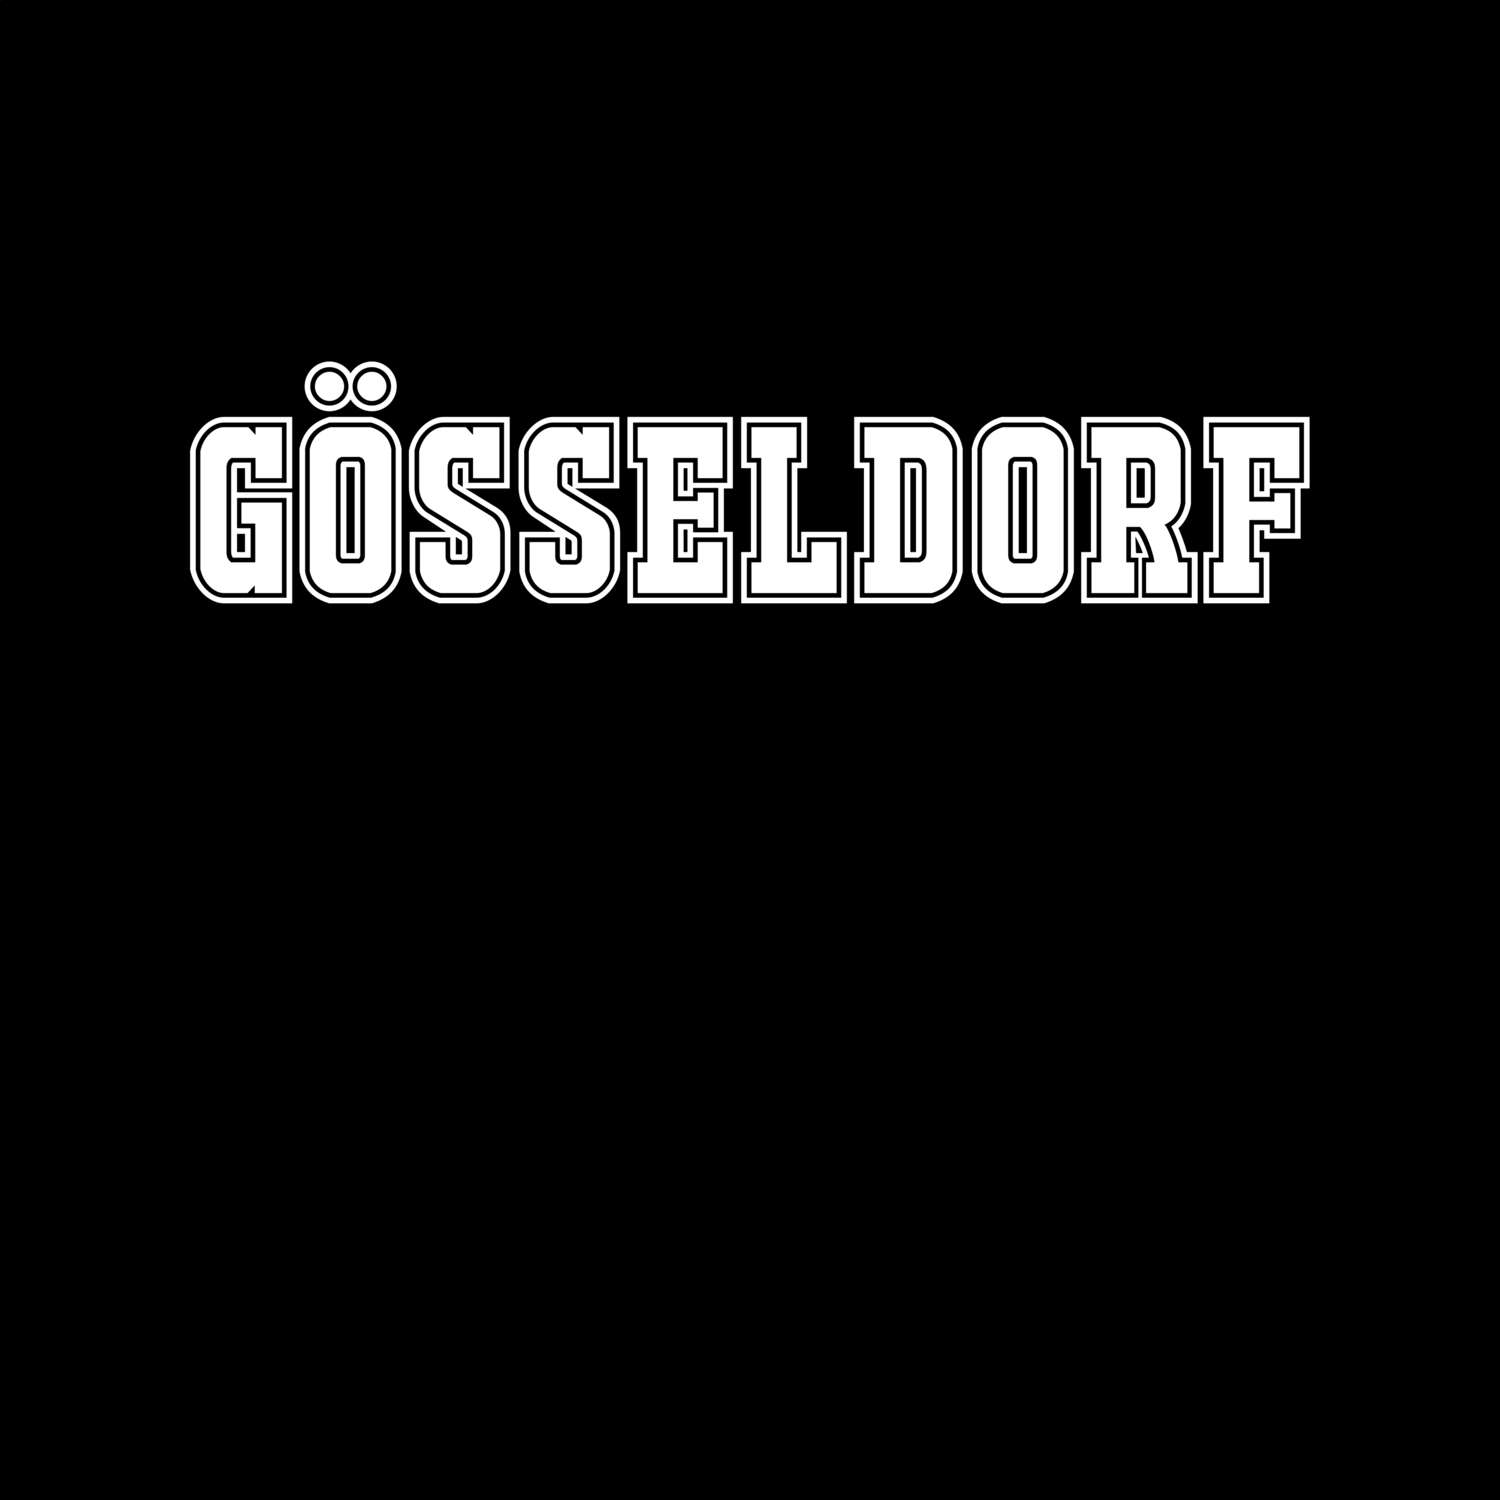 Gösseldorf T-Shirt »Classic«